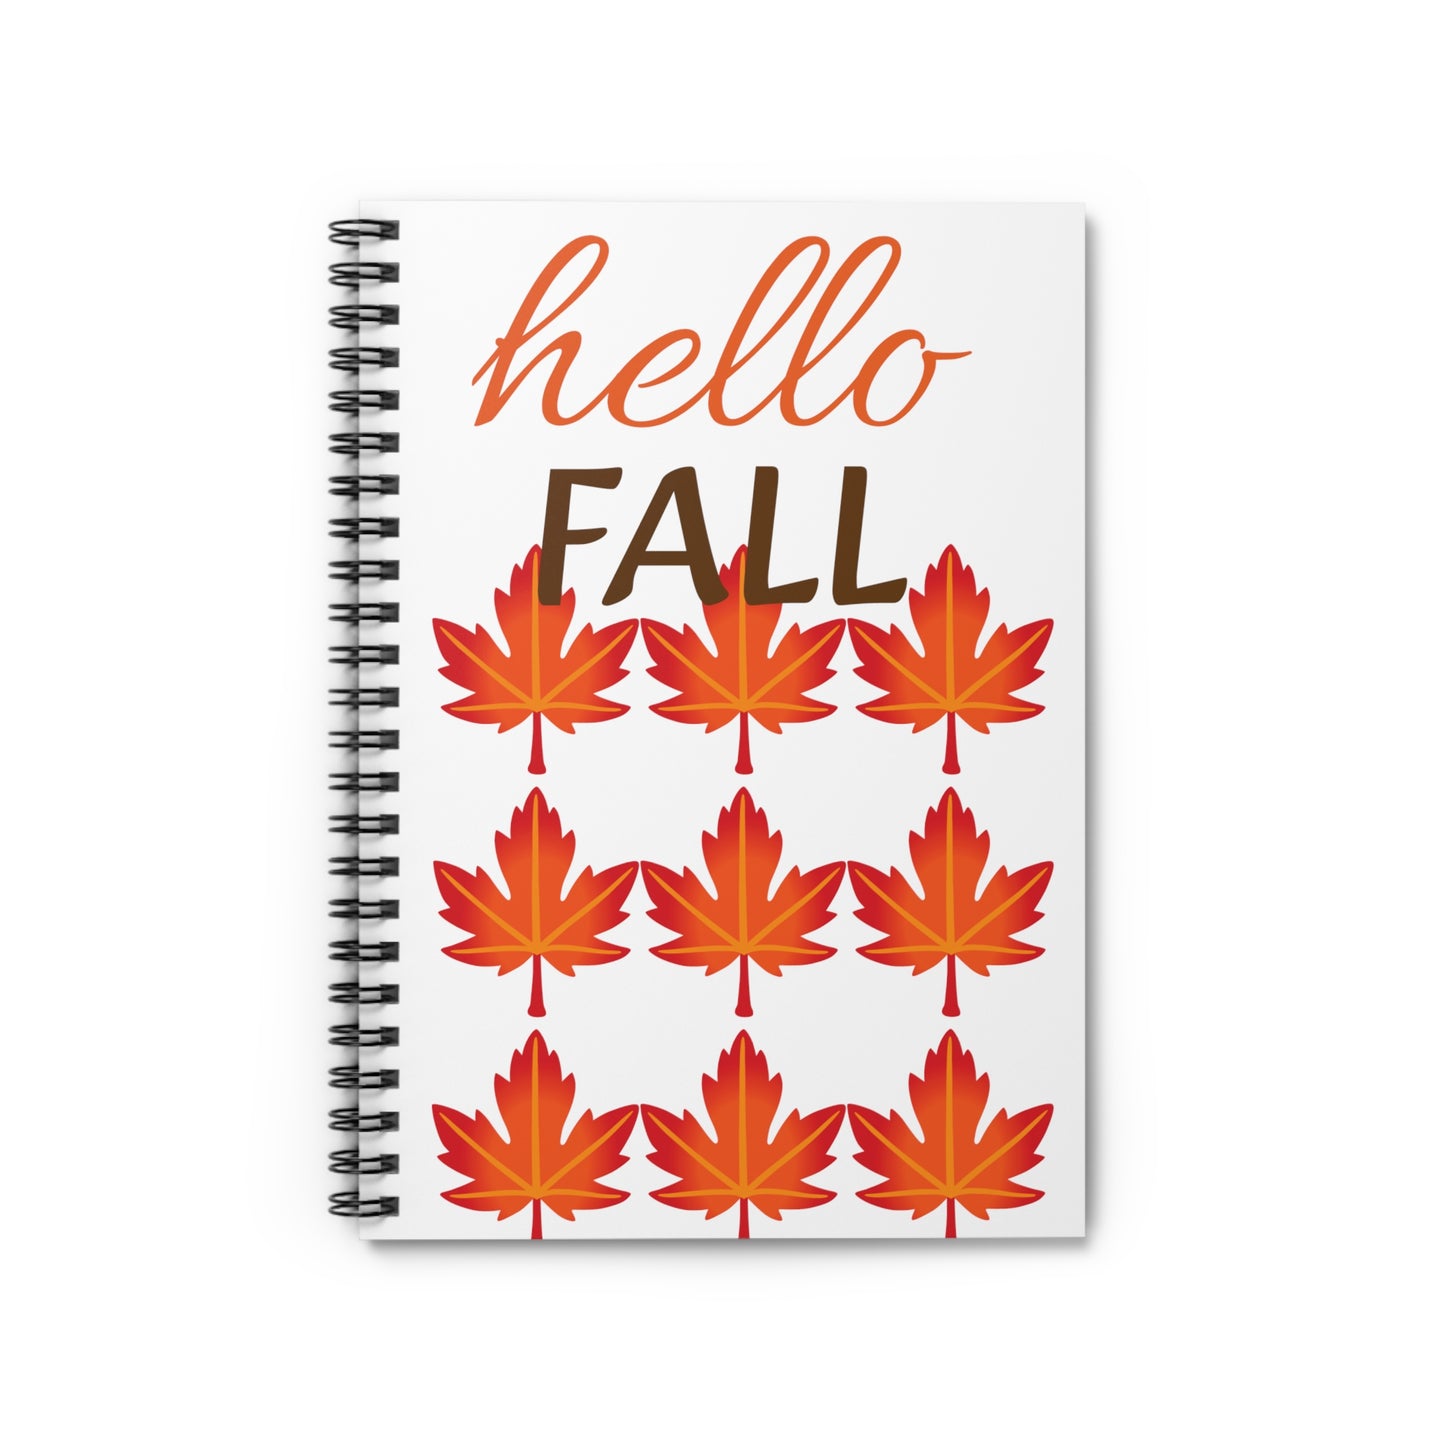 Spiral Notebook, Hello Fall Journal, Ruled Line Self Reflection Jotter